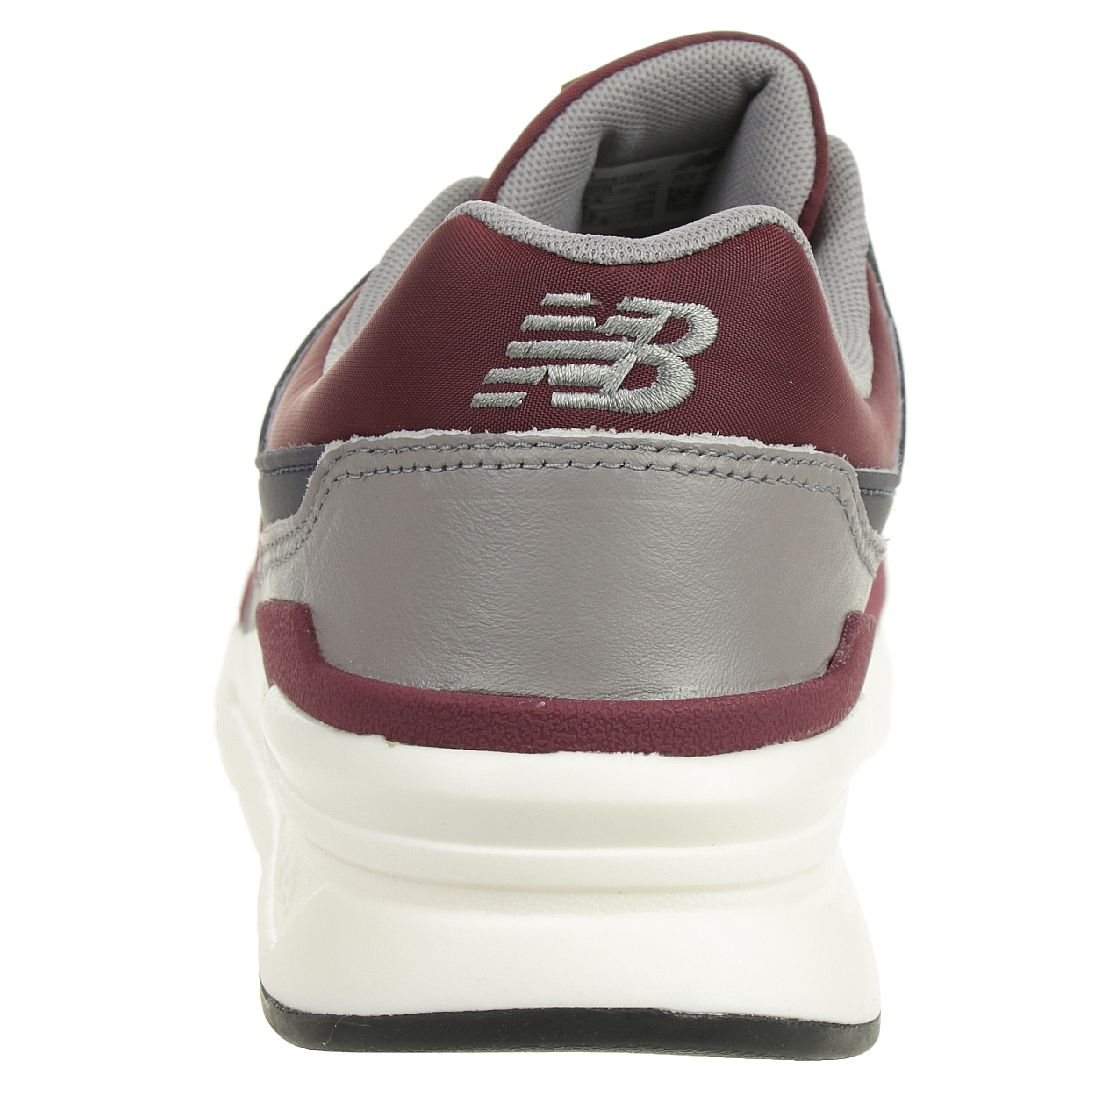 New Balance CM997 HXD Sneaker Herren Schuhe Rot